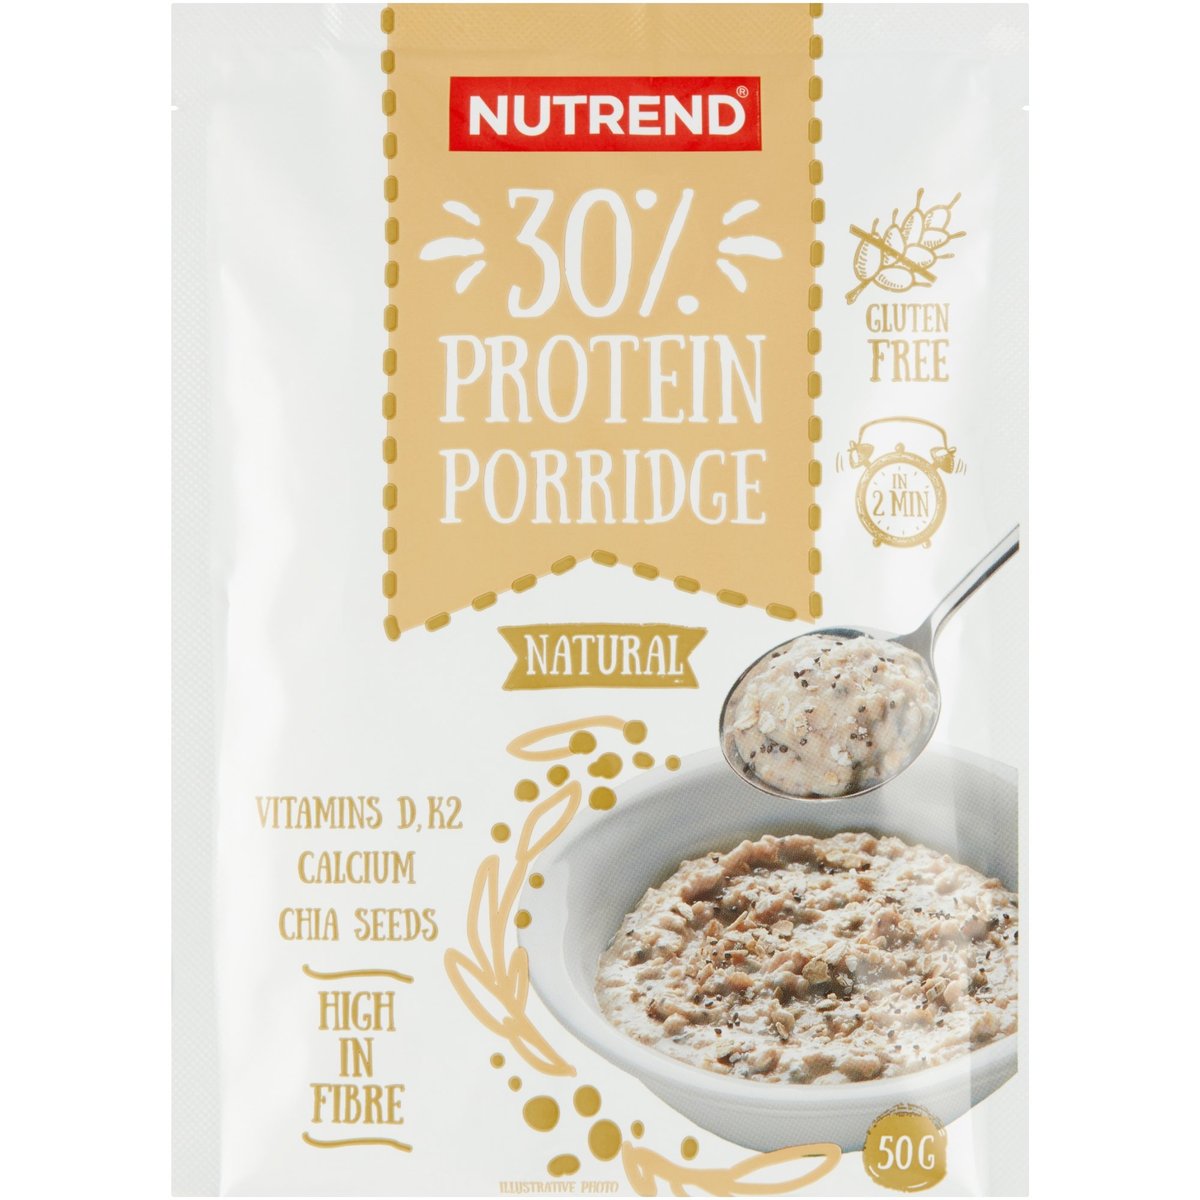 Nutrend Protein porridge natural